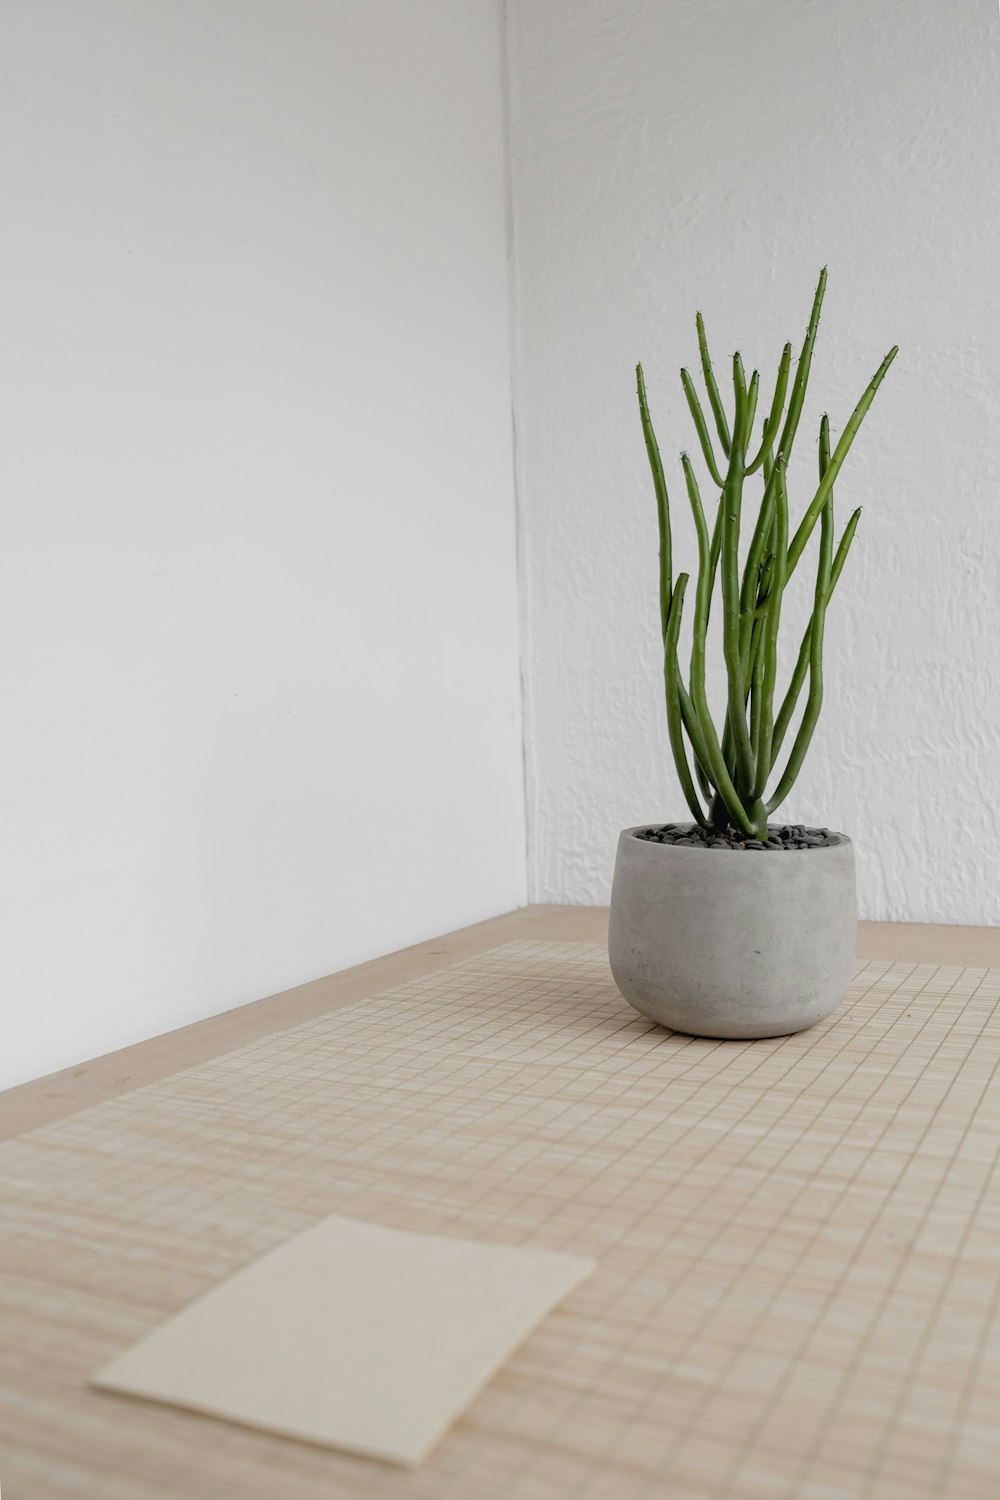 pianta di cactus verde vicino al muro